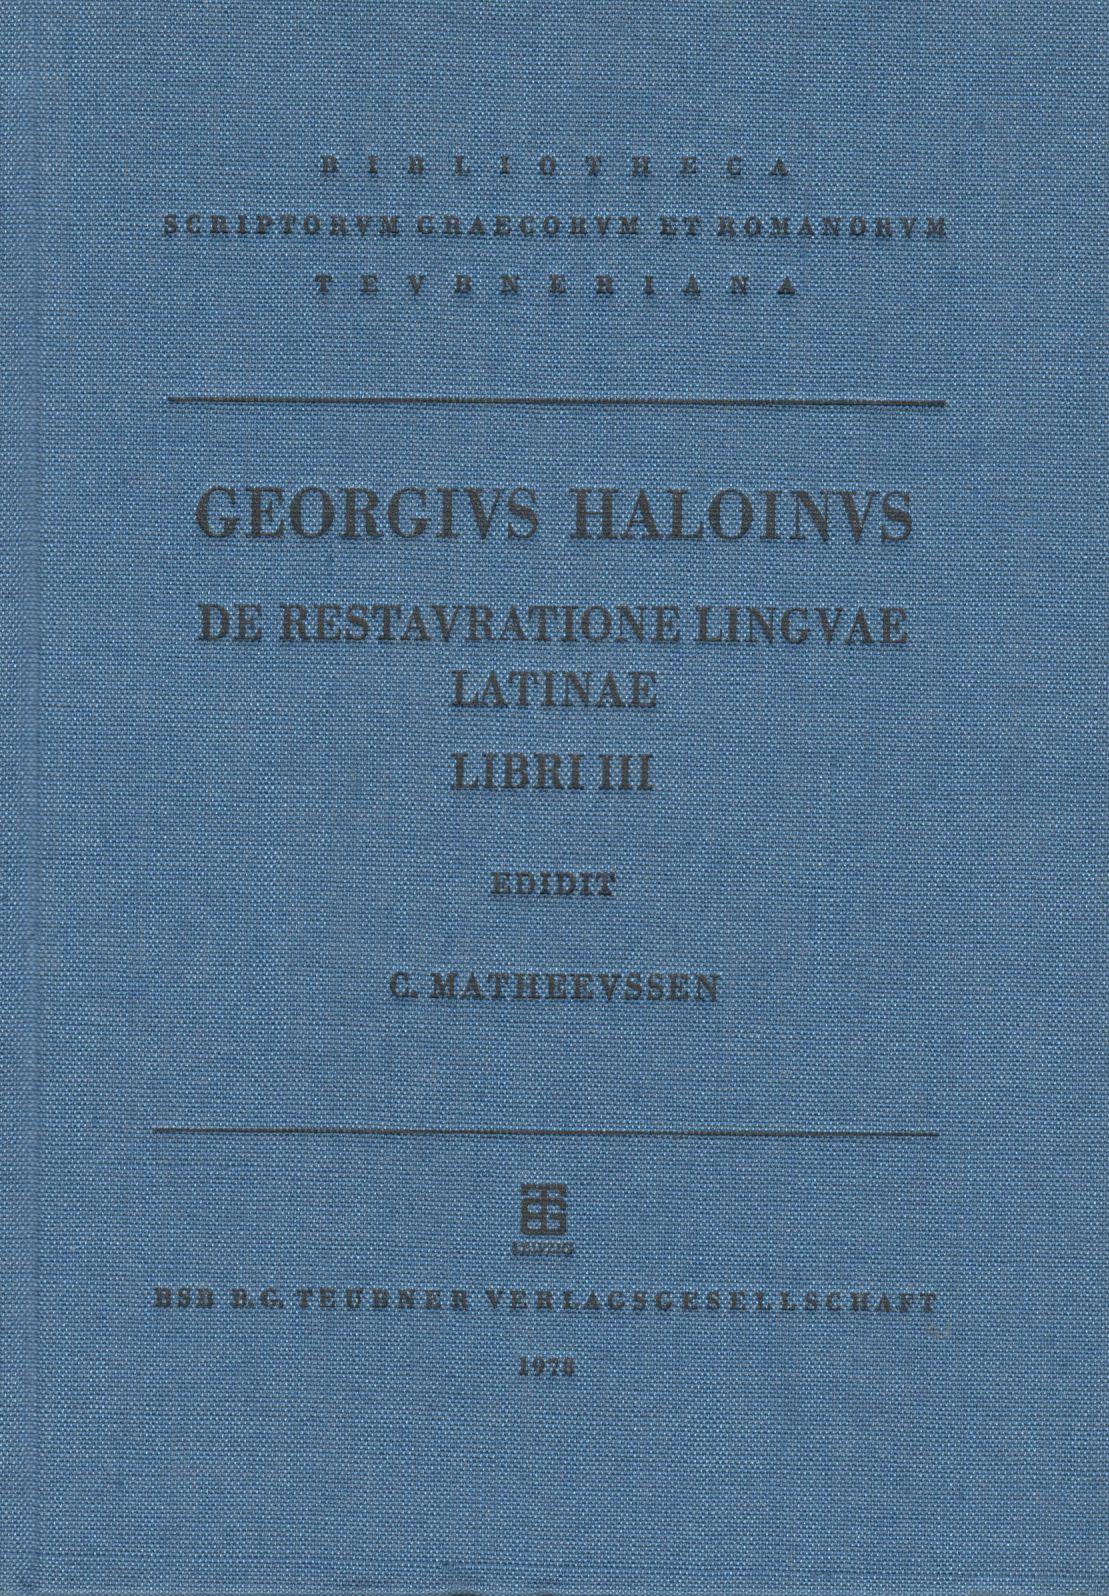 GEORGII HALOINI COMINIIQVE DOMINI DE RESTURATIONE LINGUAE LATINAE LIBRI III